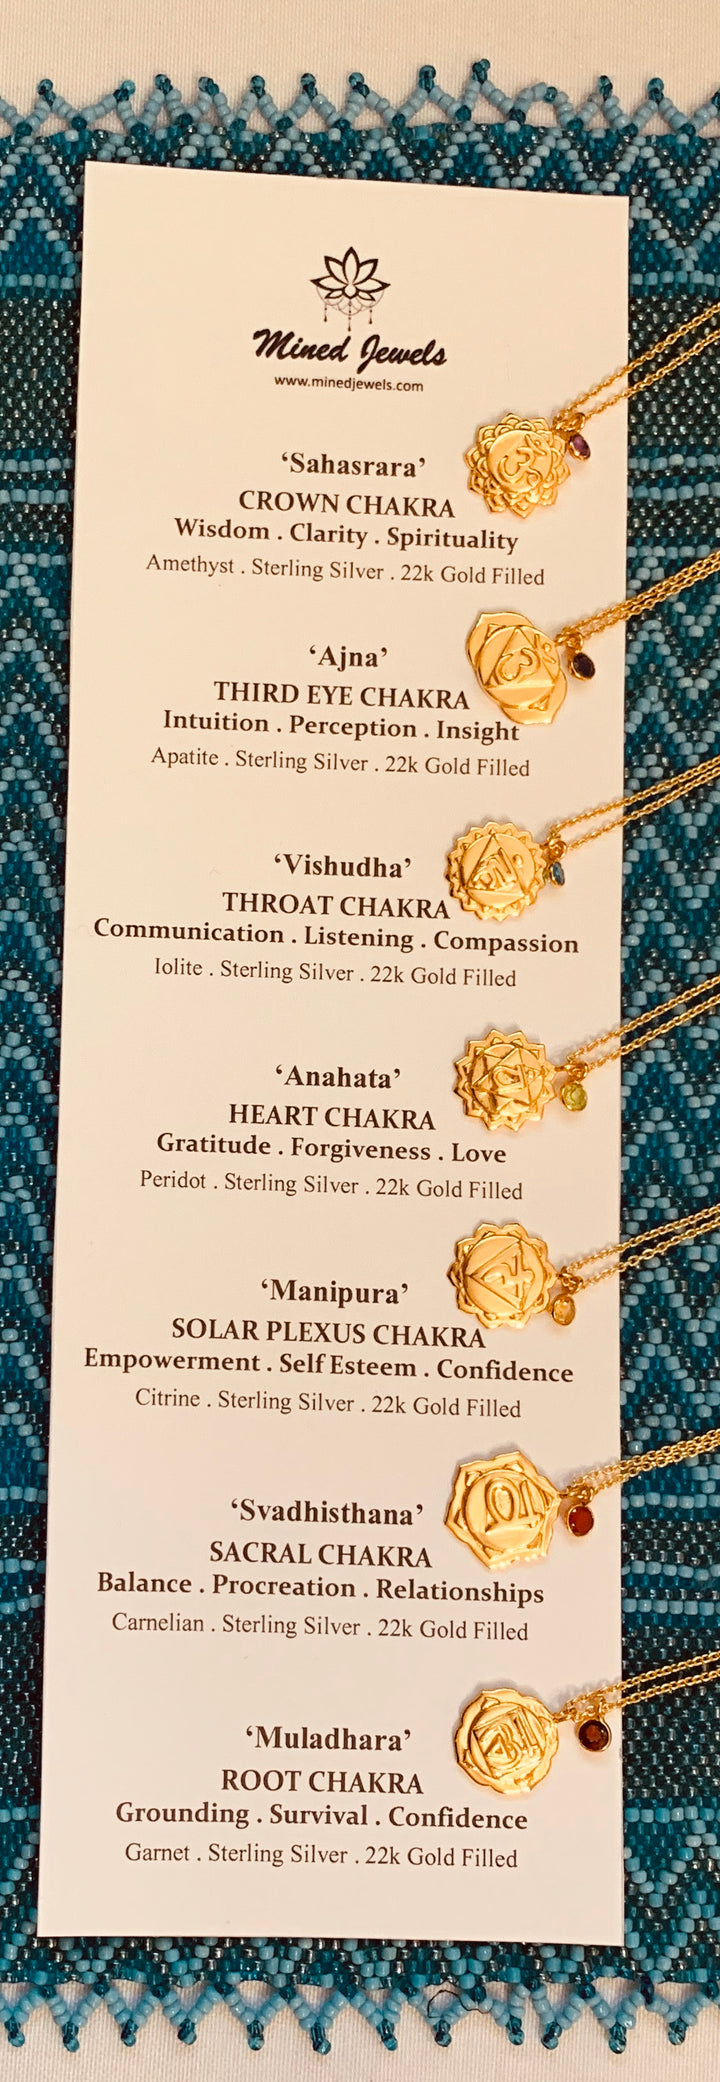 Solar Plexus Chakra, Manipura- Citrine Charm (Empowerment:Self Esteem:Confidence)Sterling Silver Gold vermeil